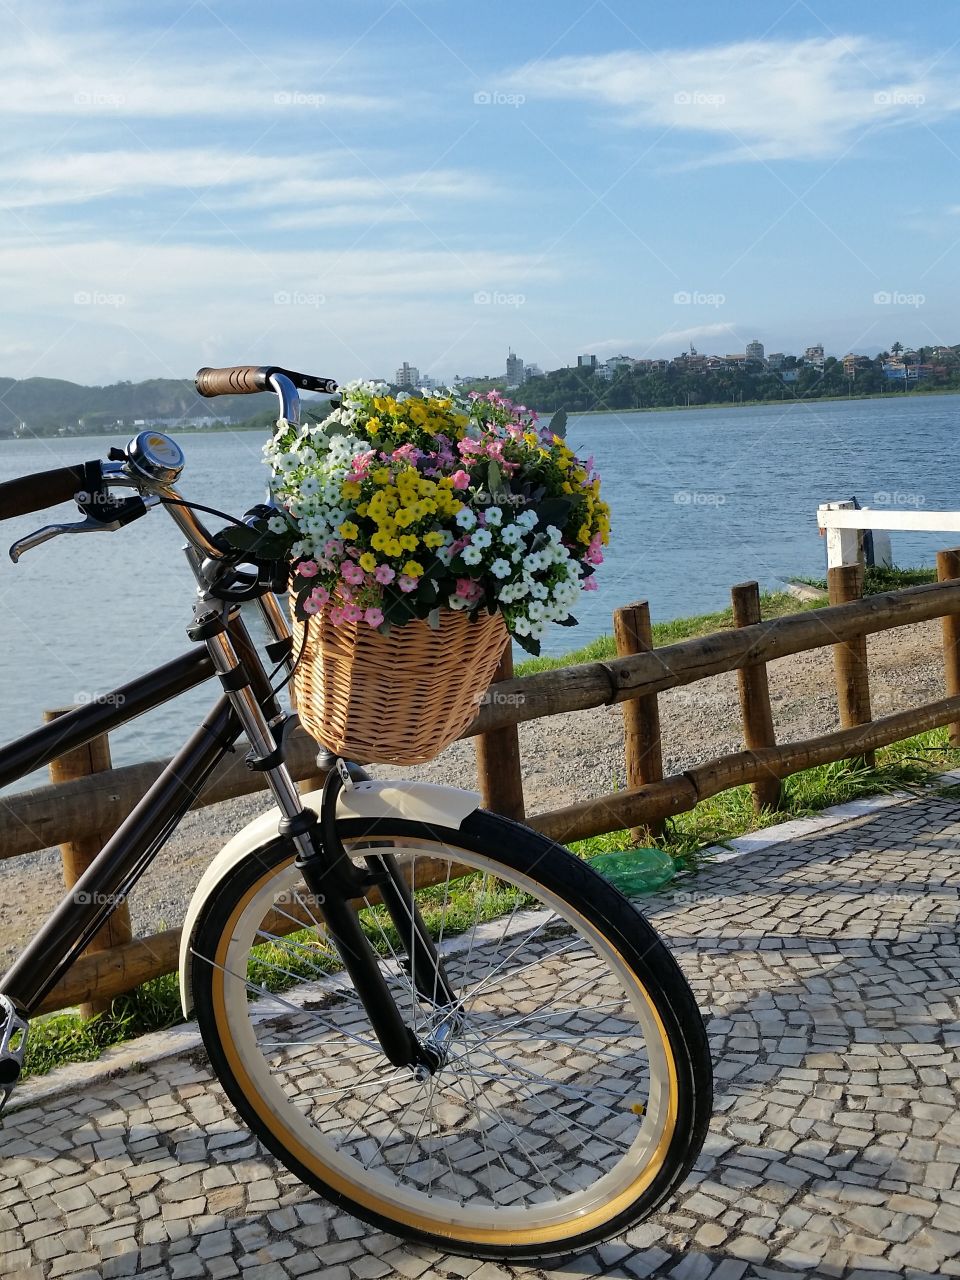 Flower bike